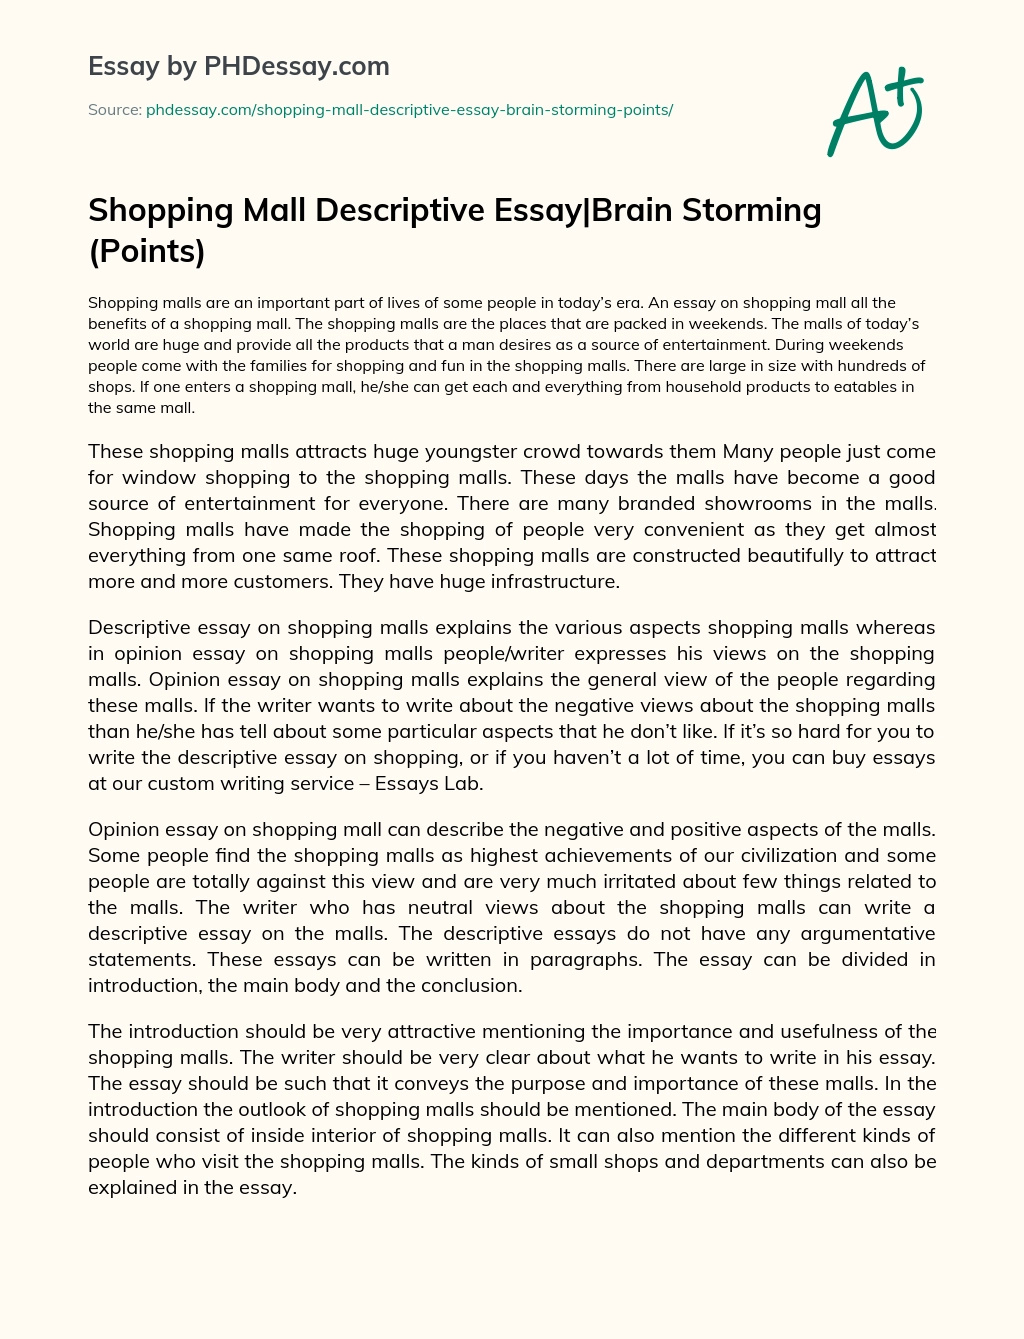 Shopping Mall Descriptive Essay|Brain Storming (Points)